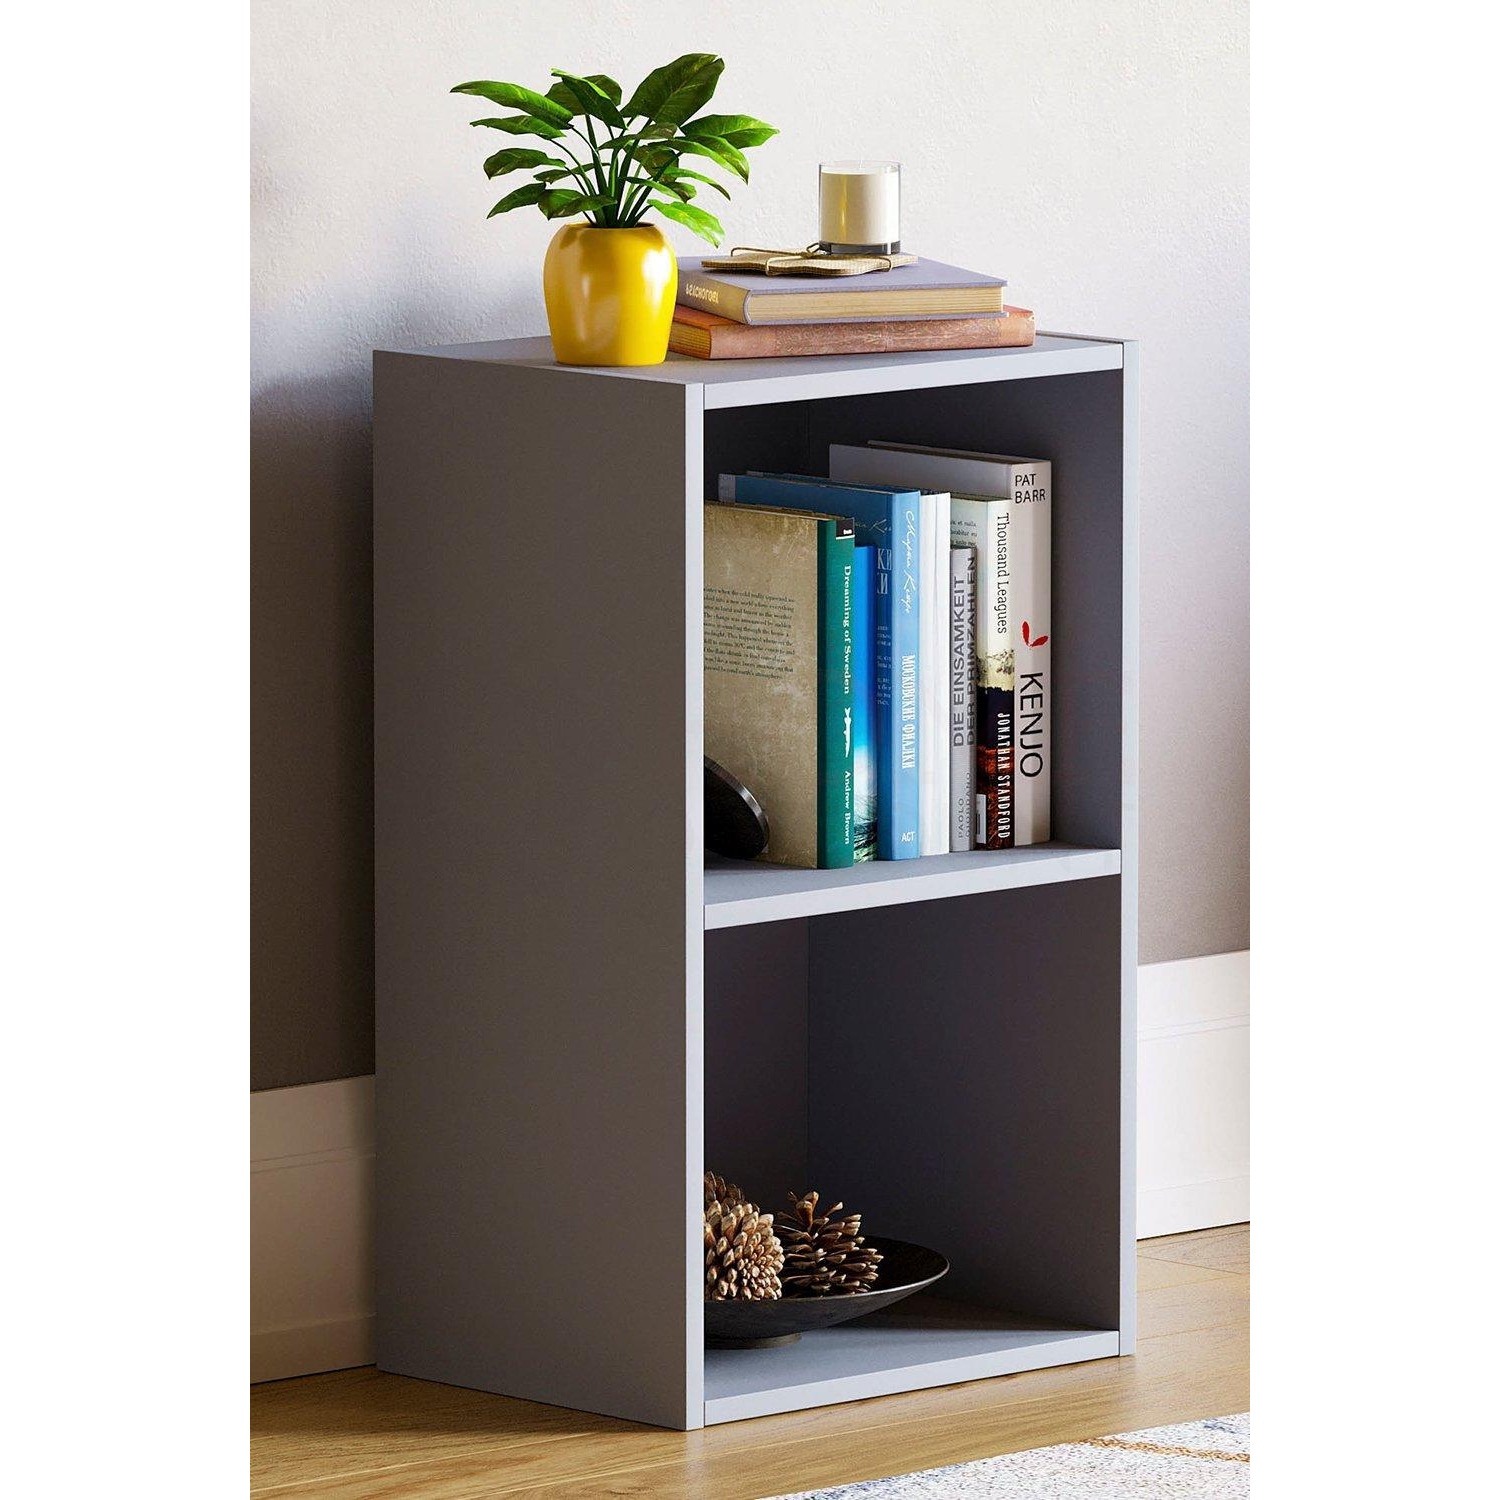 Vida Designs Oxford 2 Tier Cube Bookcase Storage 540 x 320 x 240 mm - image 1